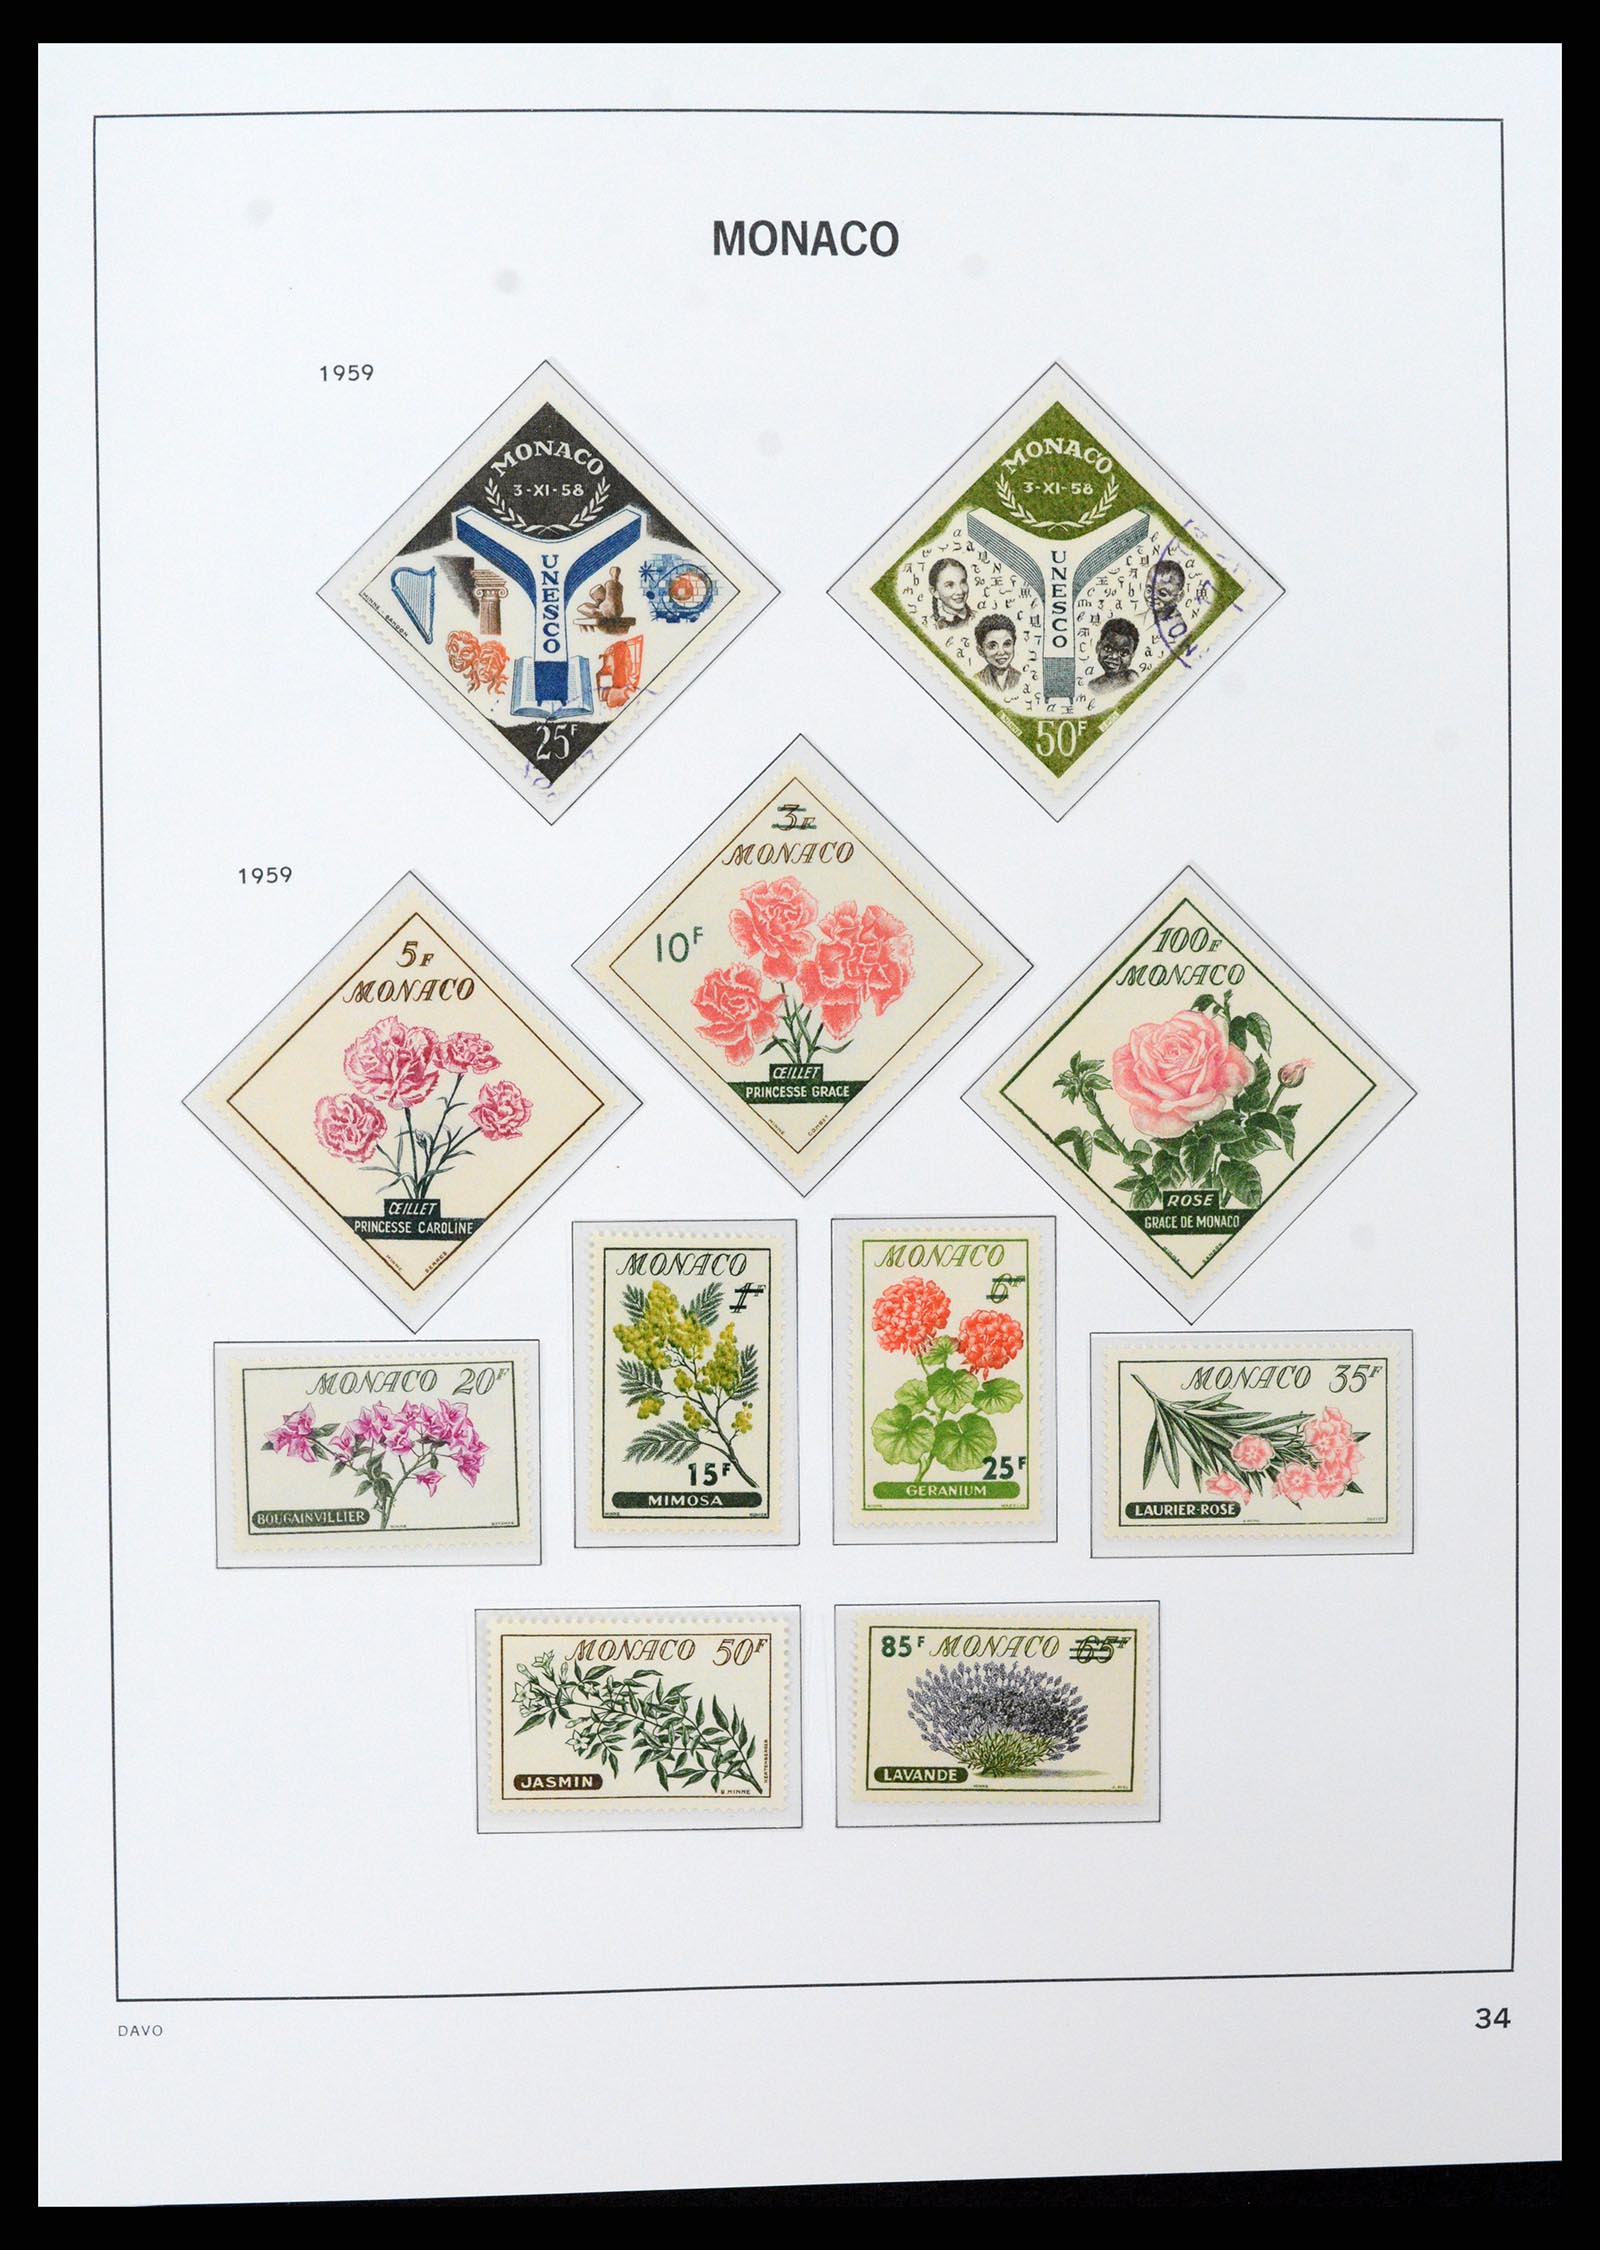 37279 034 - Stamp collection 37279 Monaco 1885-1969.